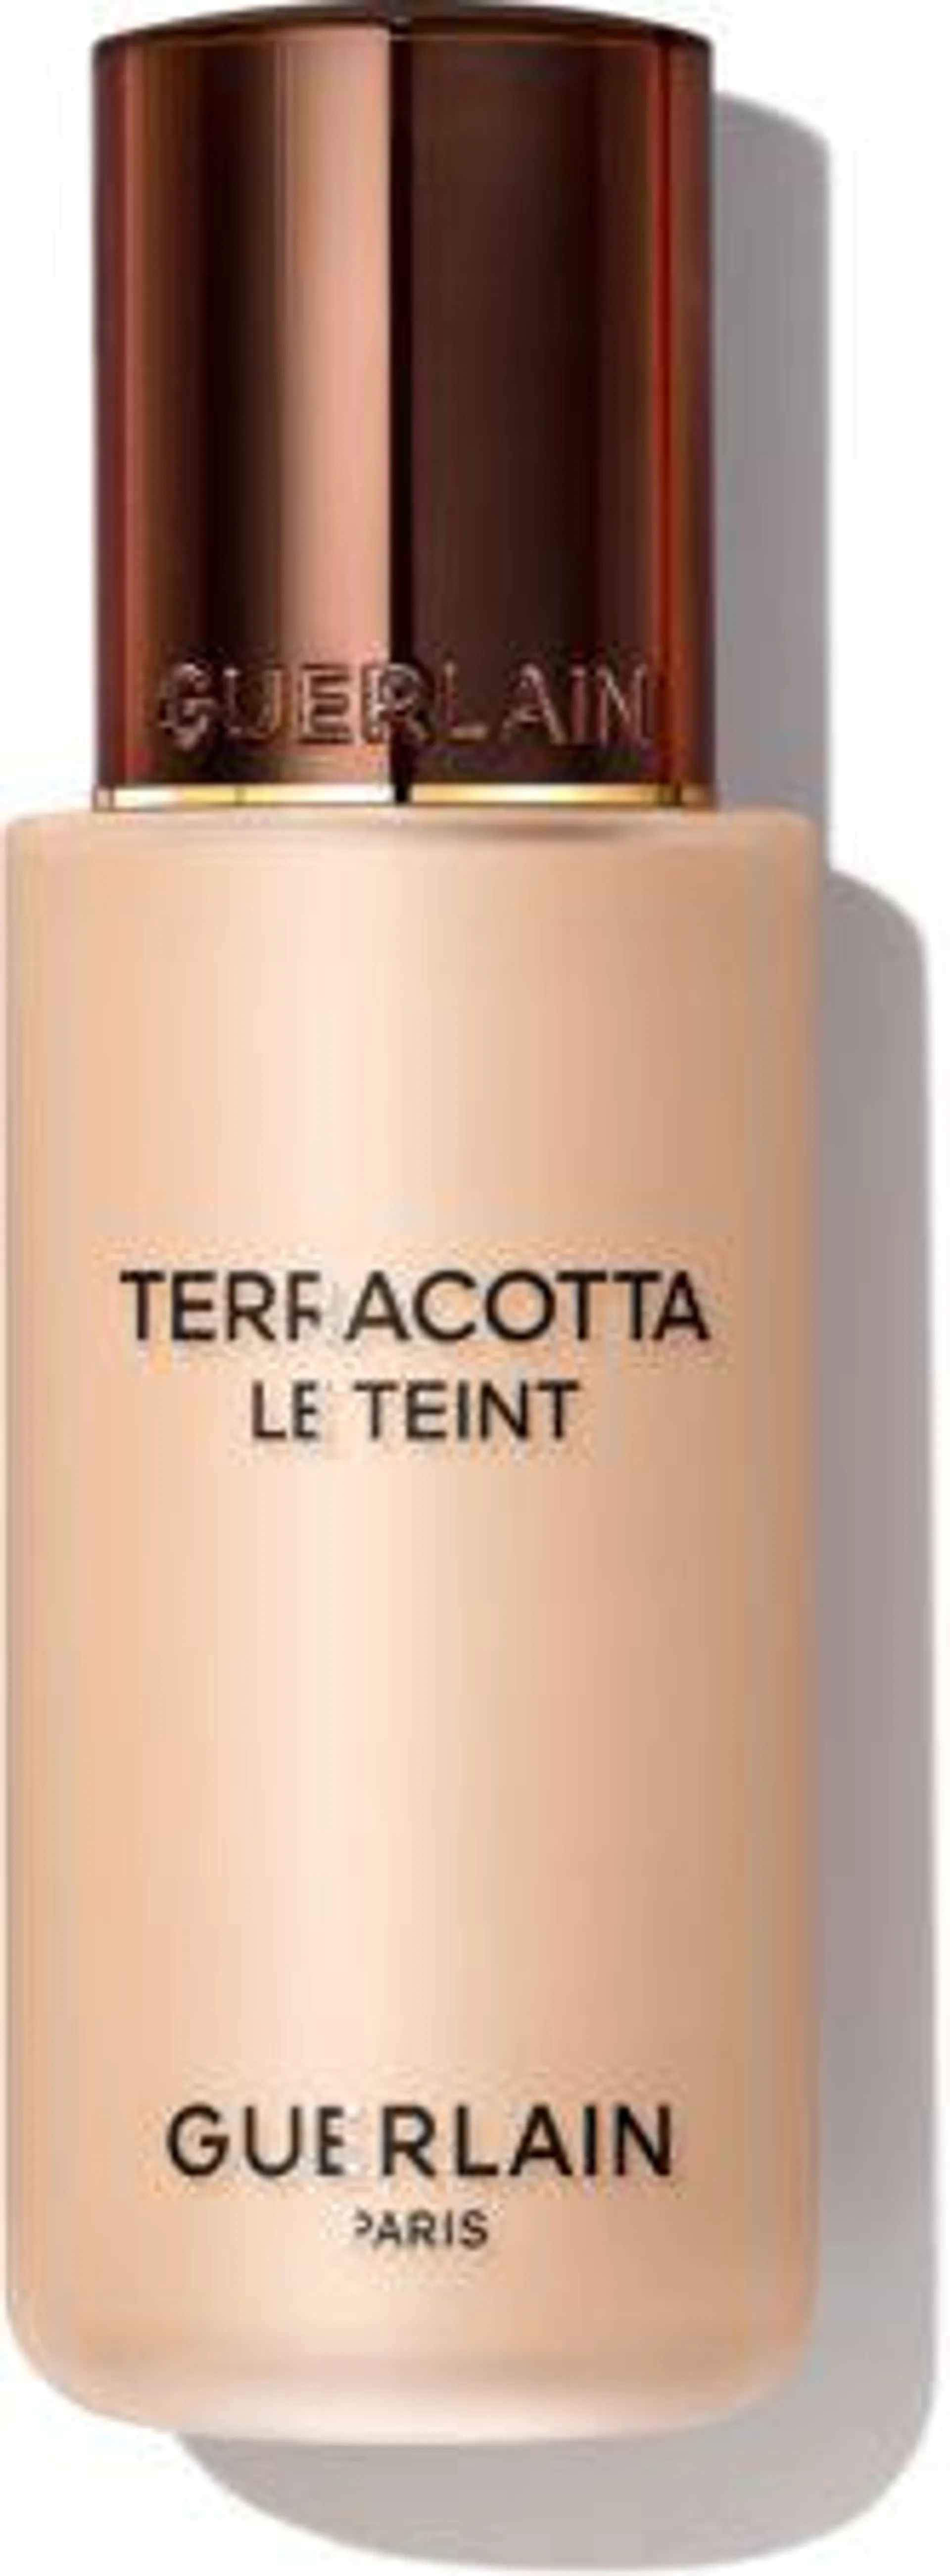 Terracotta Le Teint